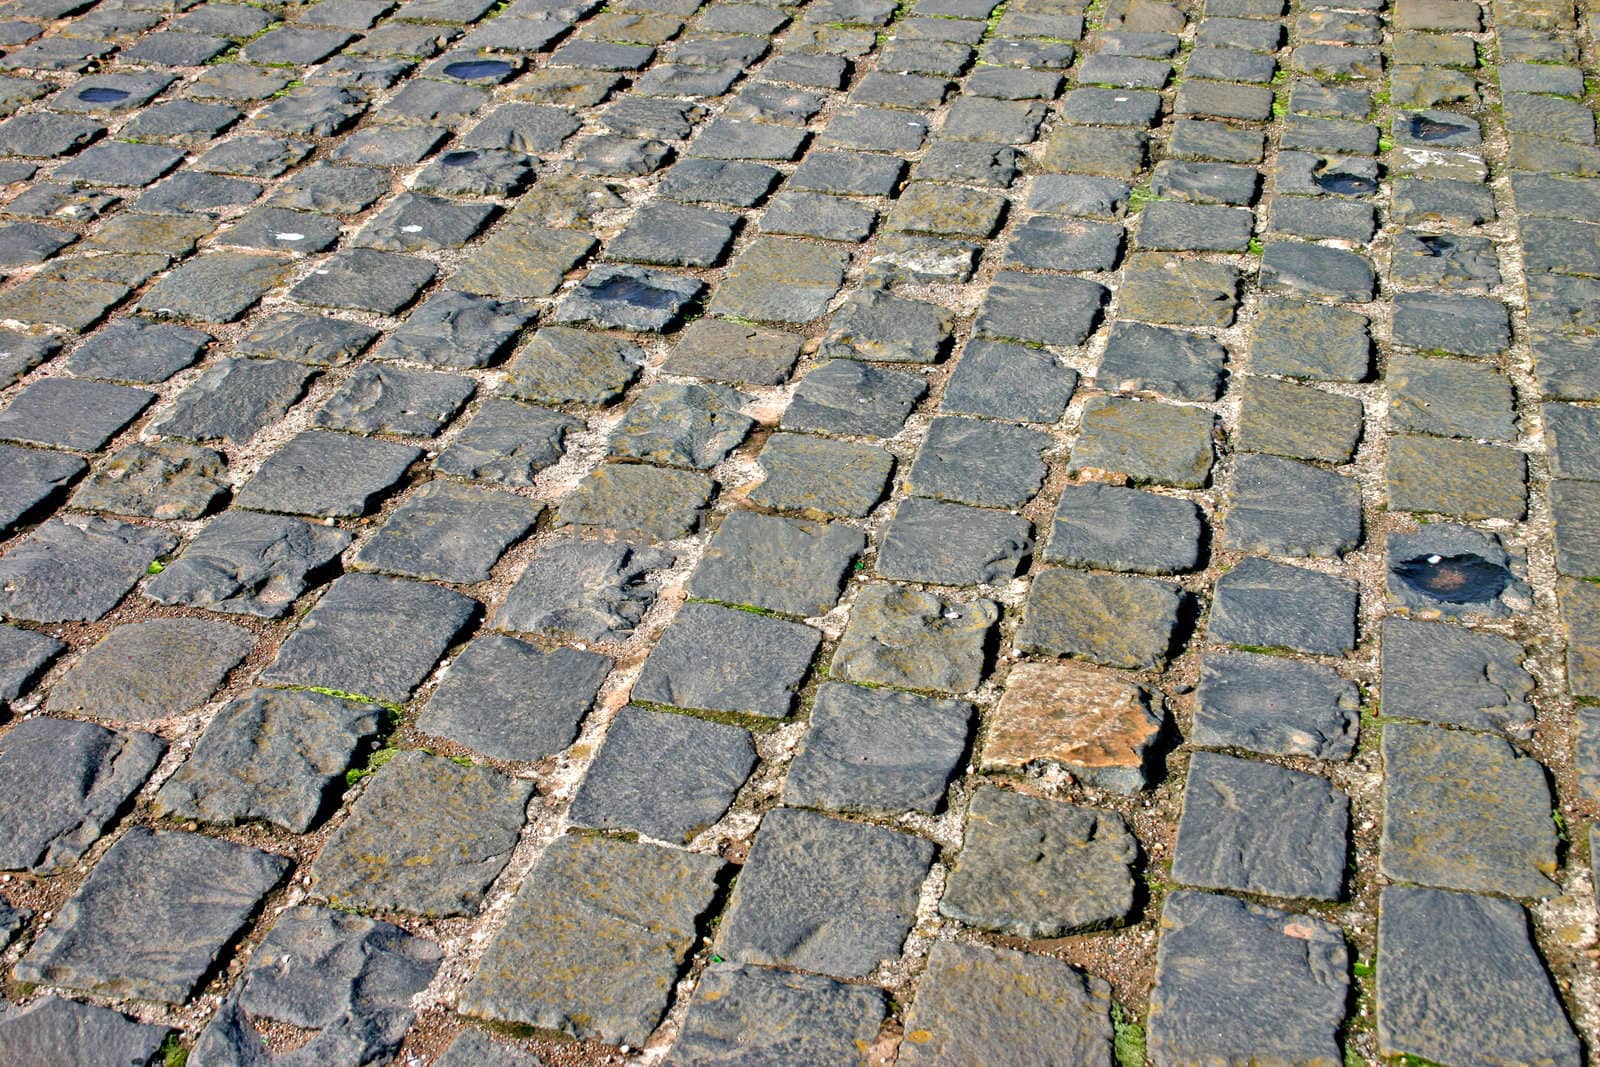 Regular Cobbled Street Background Pattern of Stones